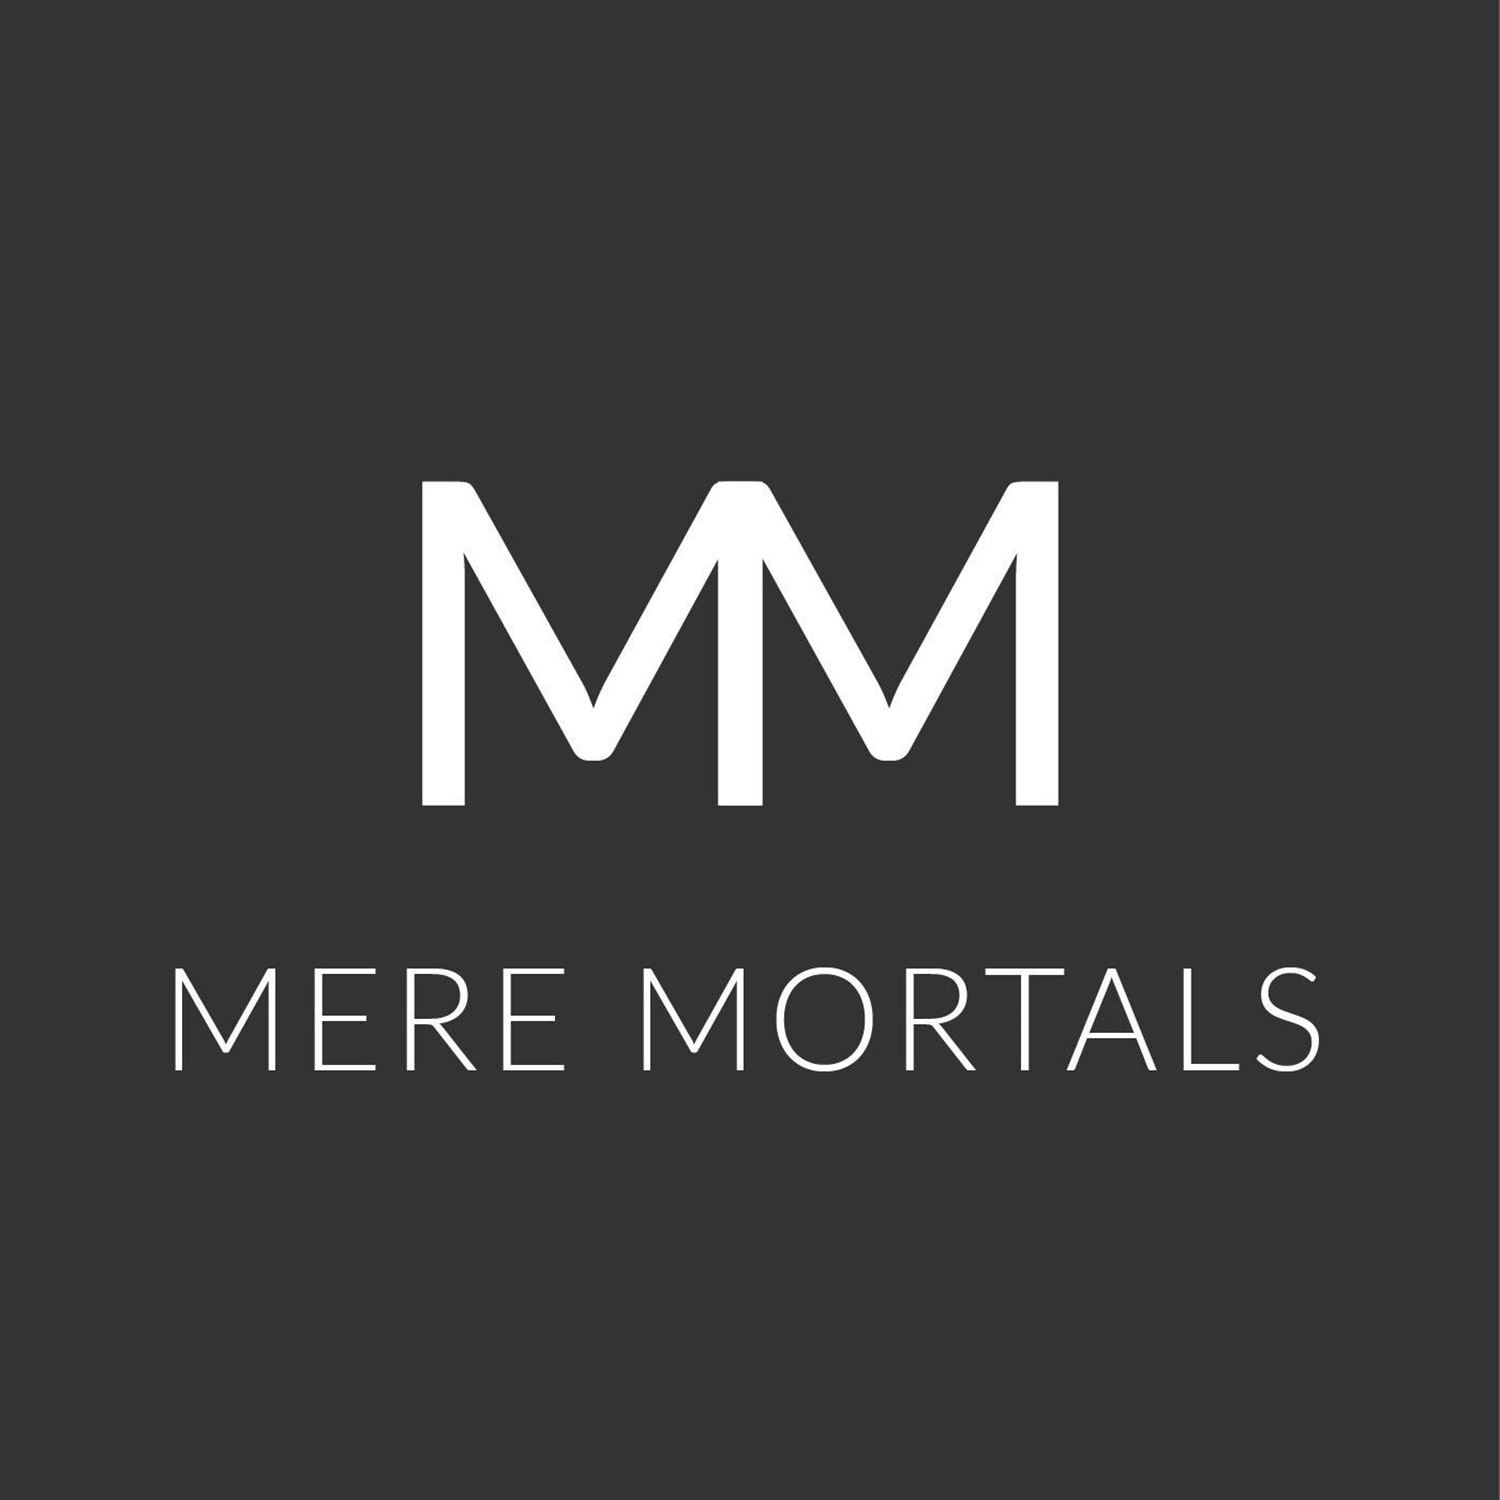 The Future of Money? (Mere Mortals Episode #44 - Cryptocurrencies)